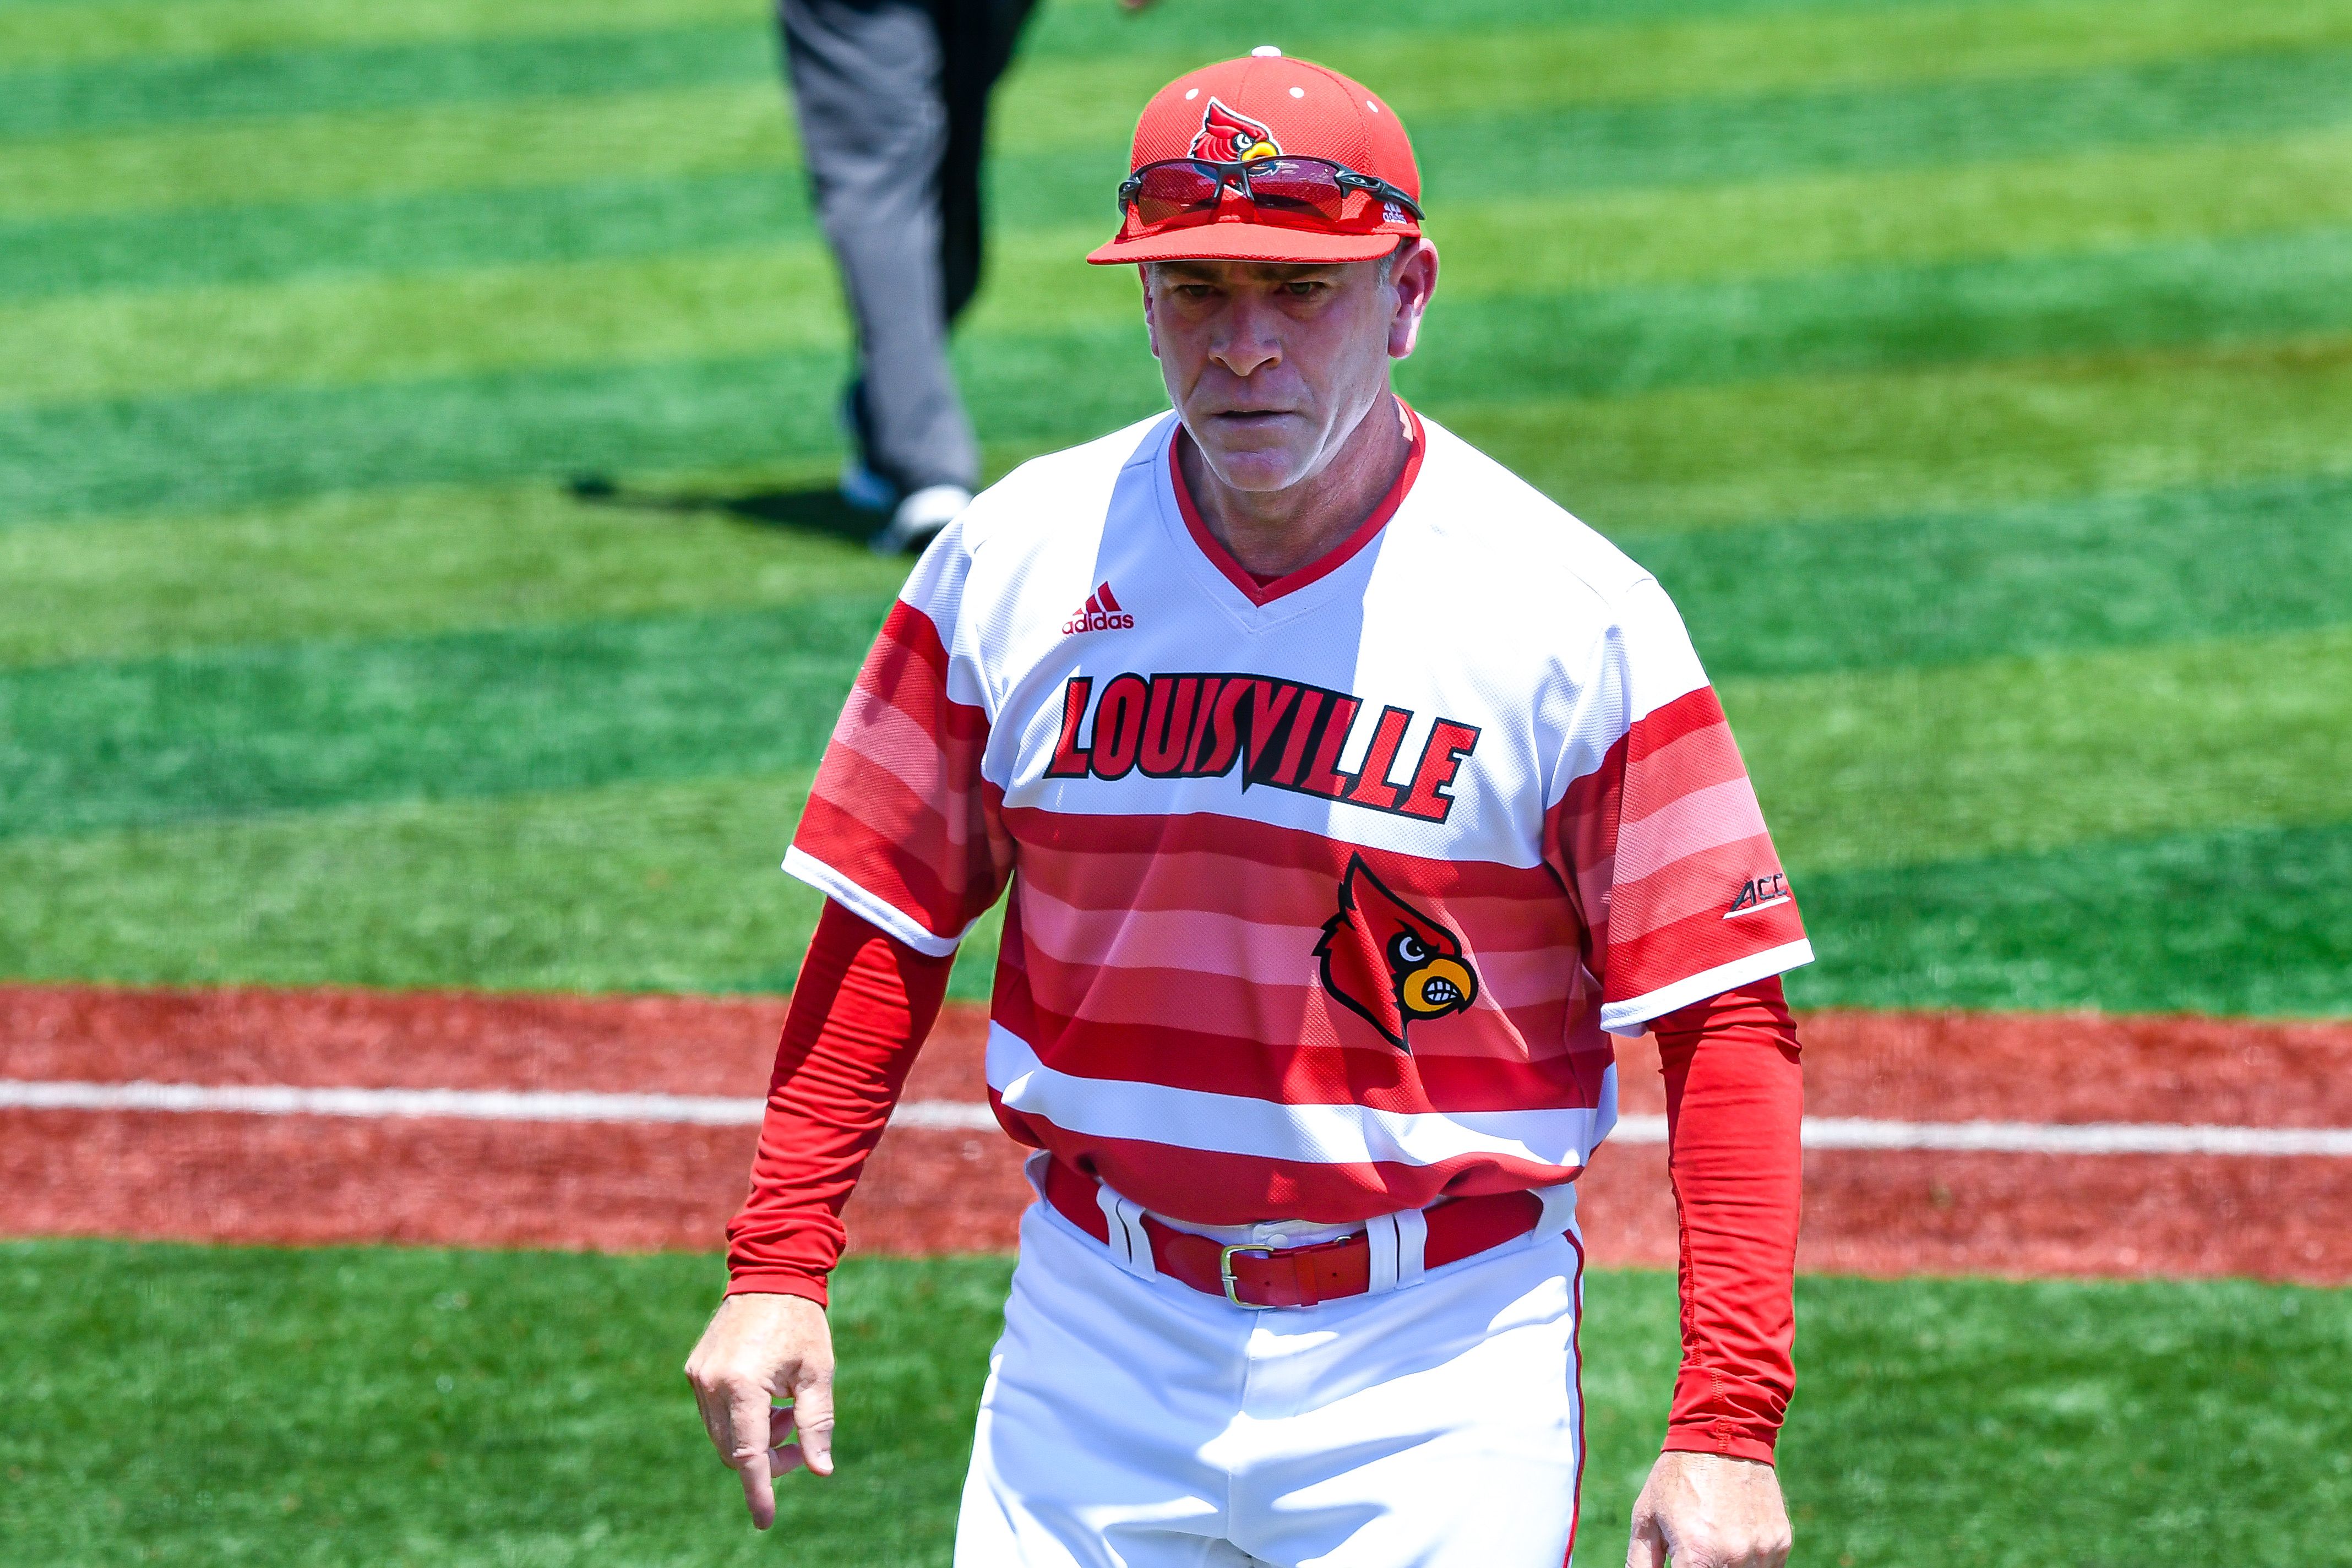 Louisville baseball's Dan McDonnell not looking despite rumors